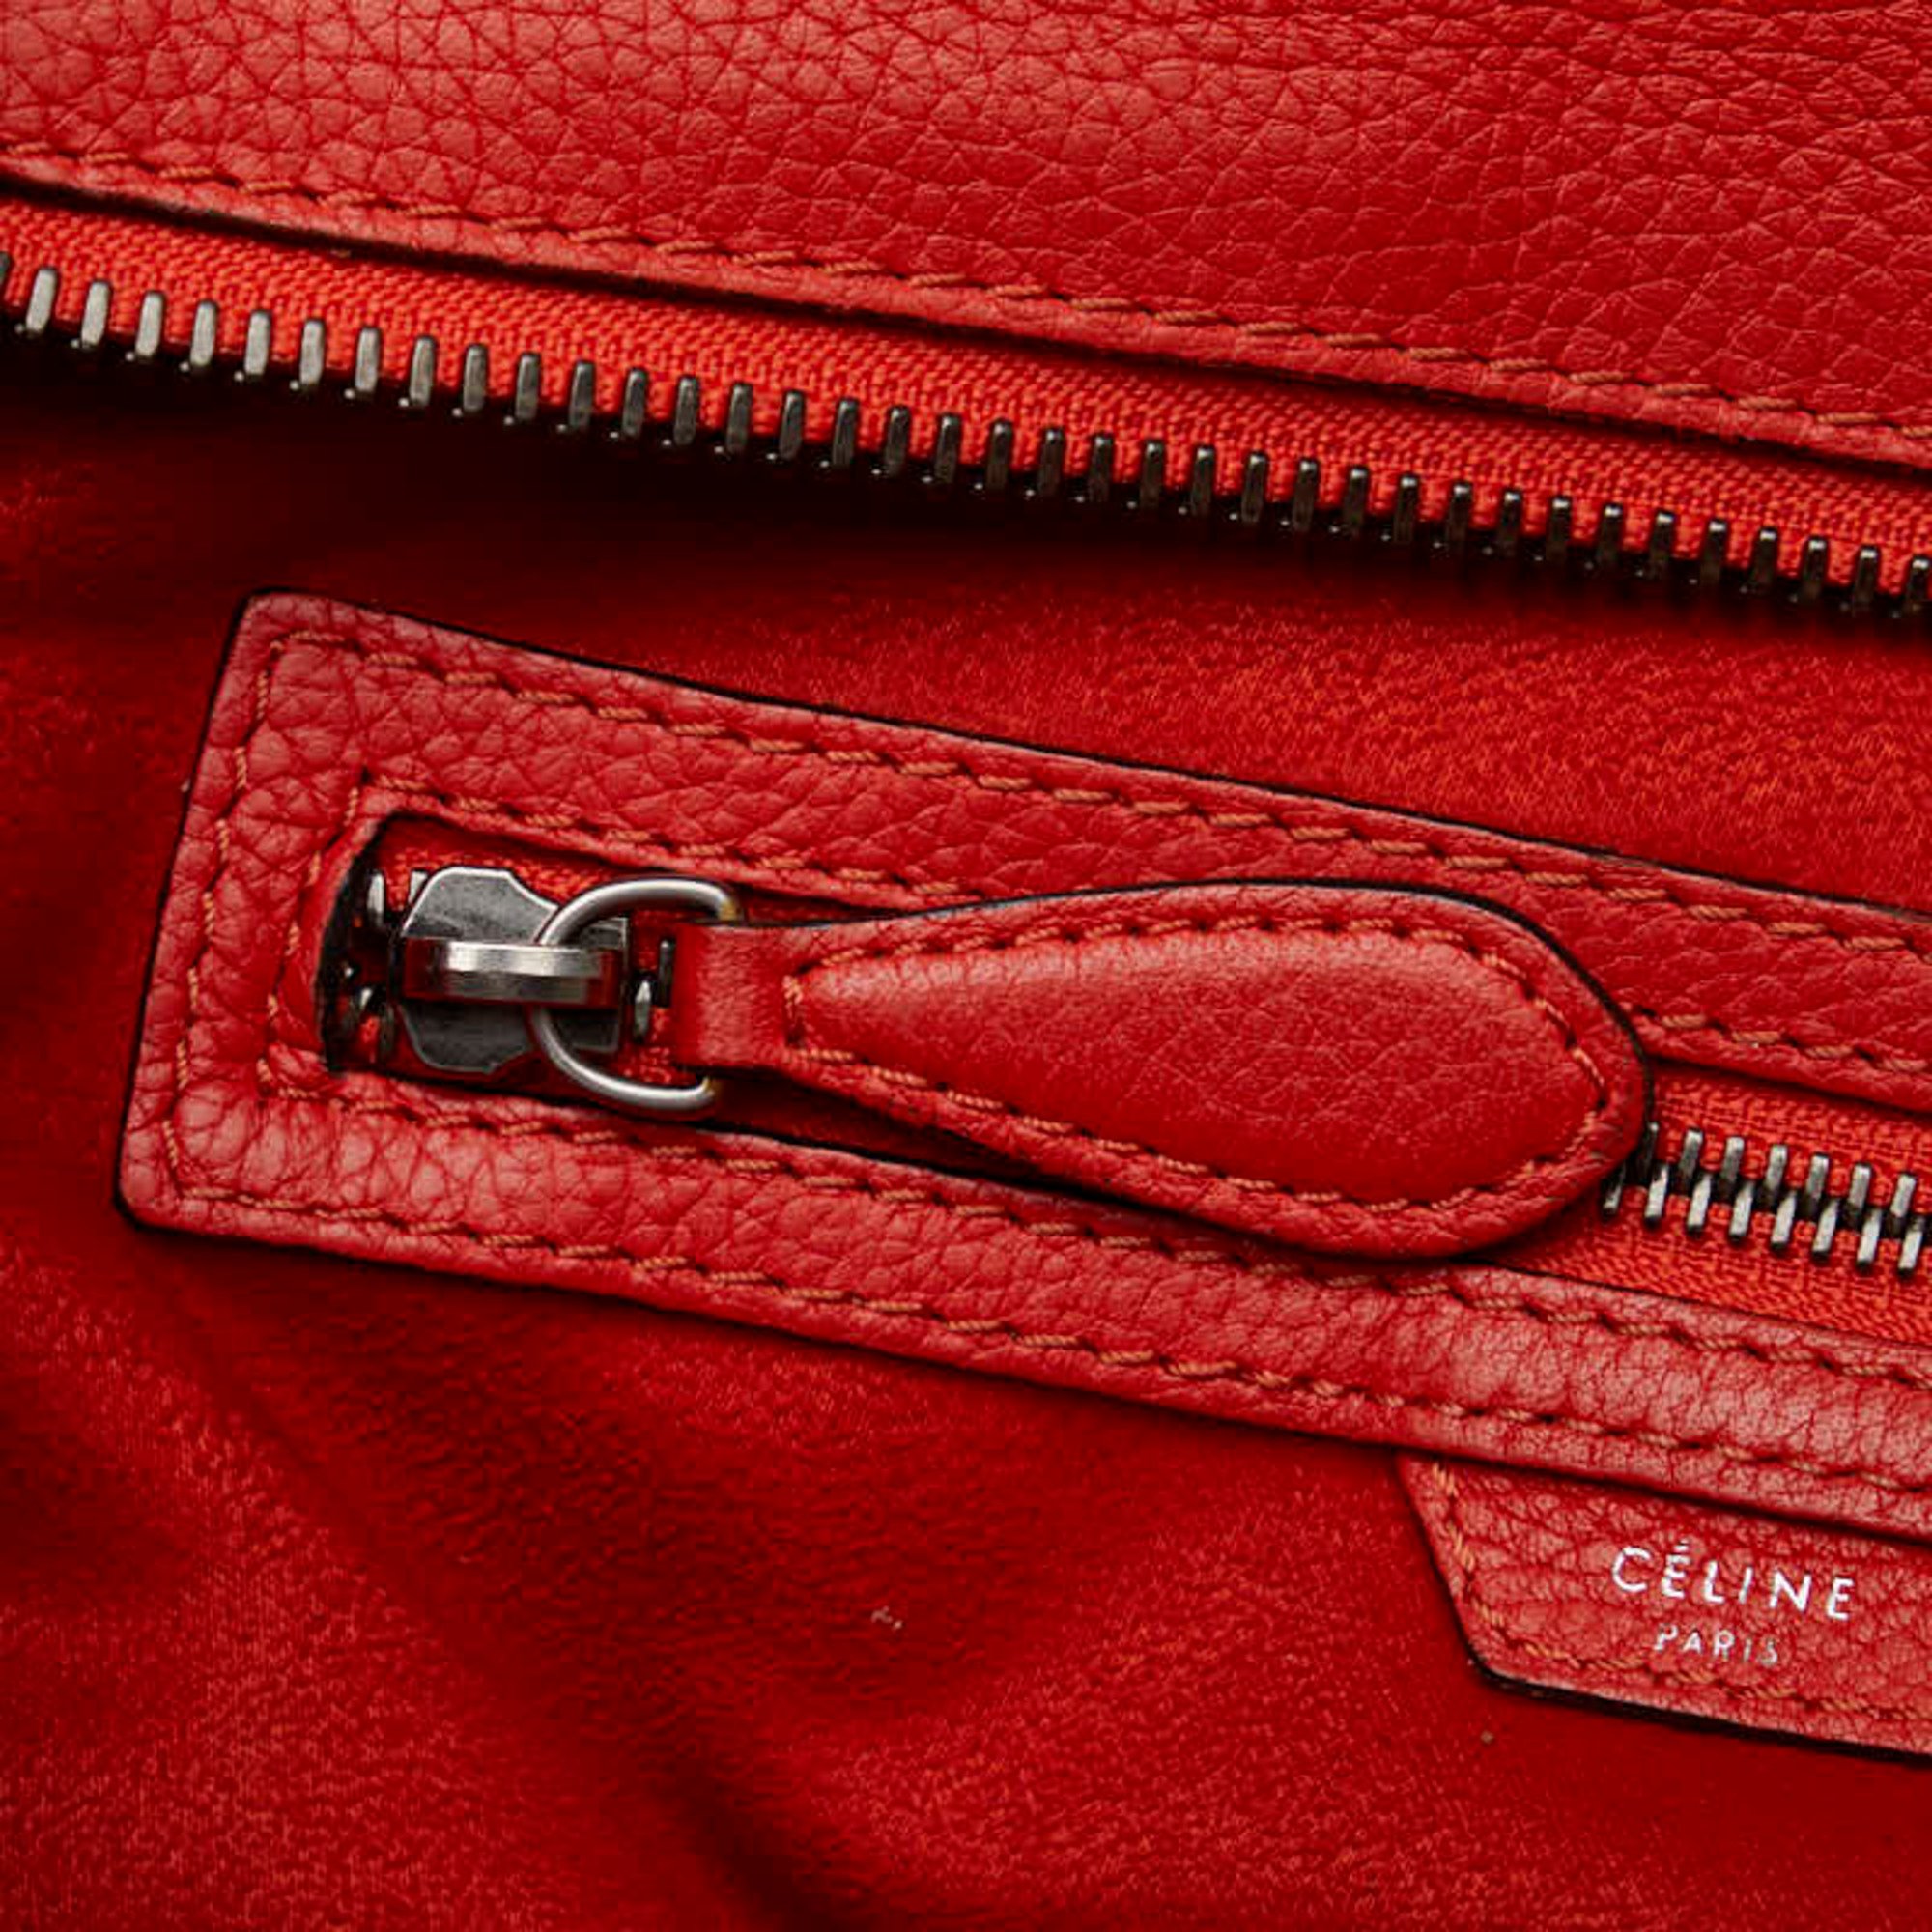 Celine Luggage Shopper Handbag 165213 Orange Leather Women's CELINE